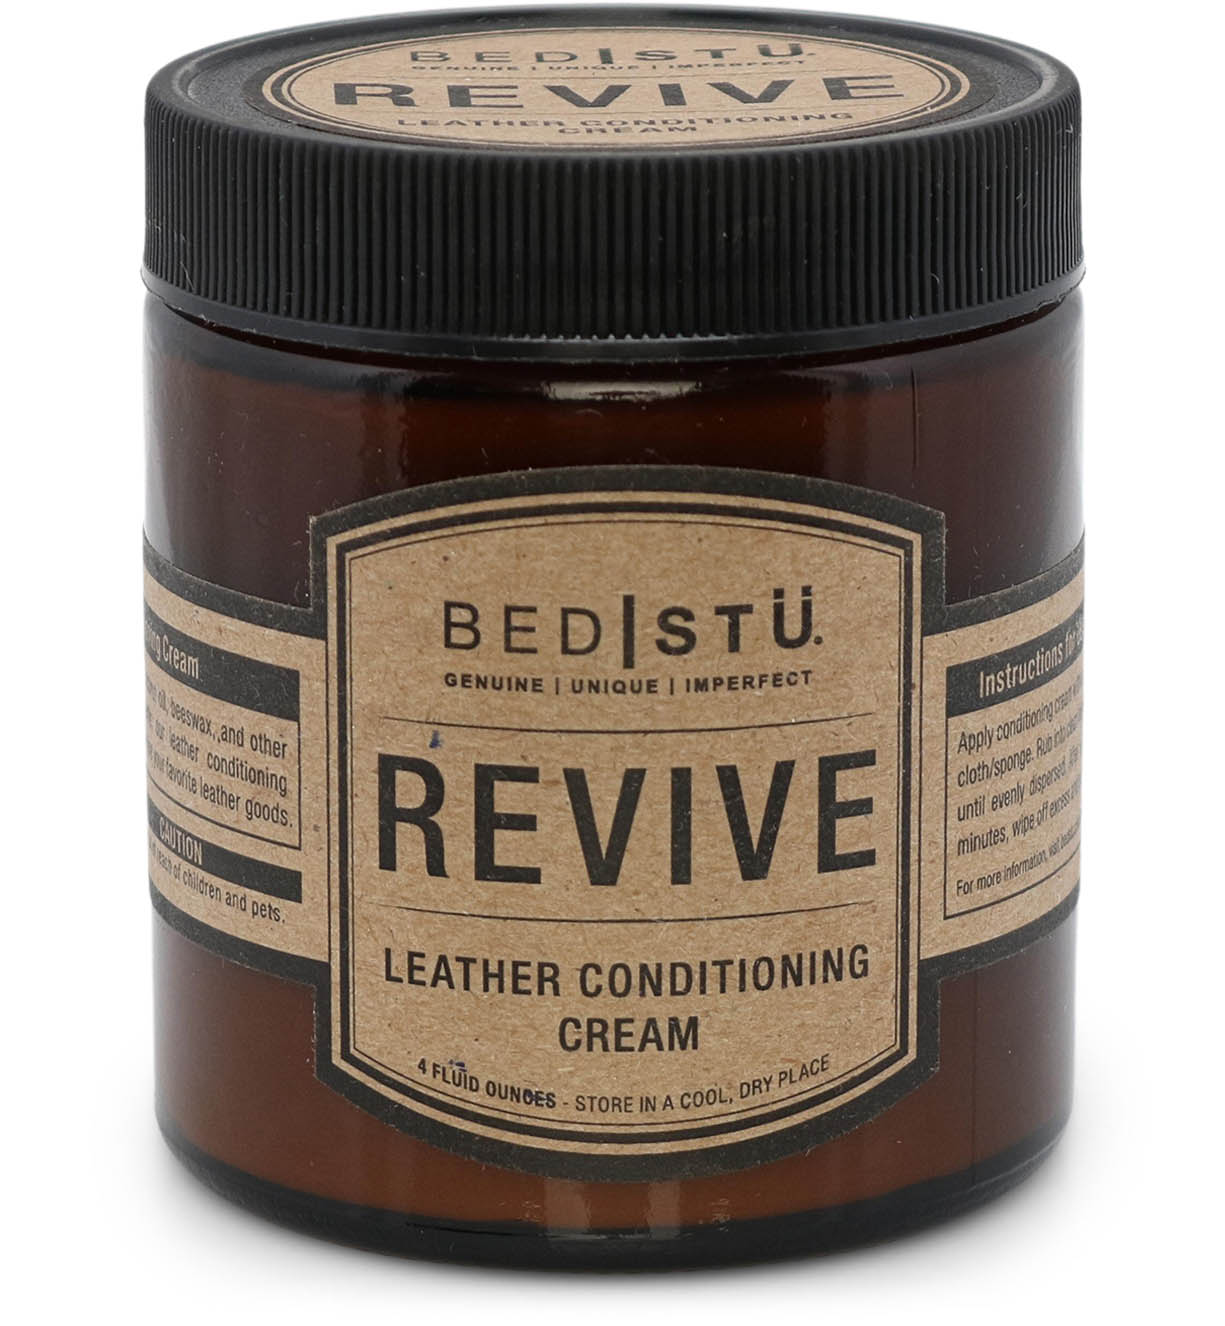 Bed Stu's Revive Leather Cream.